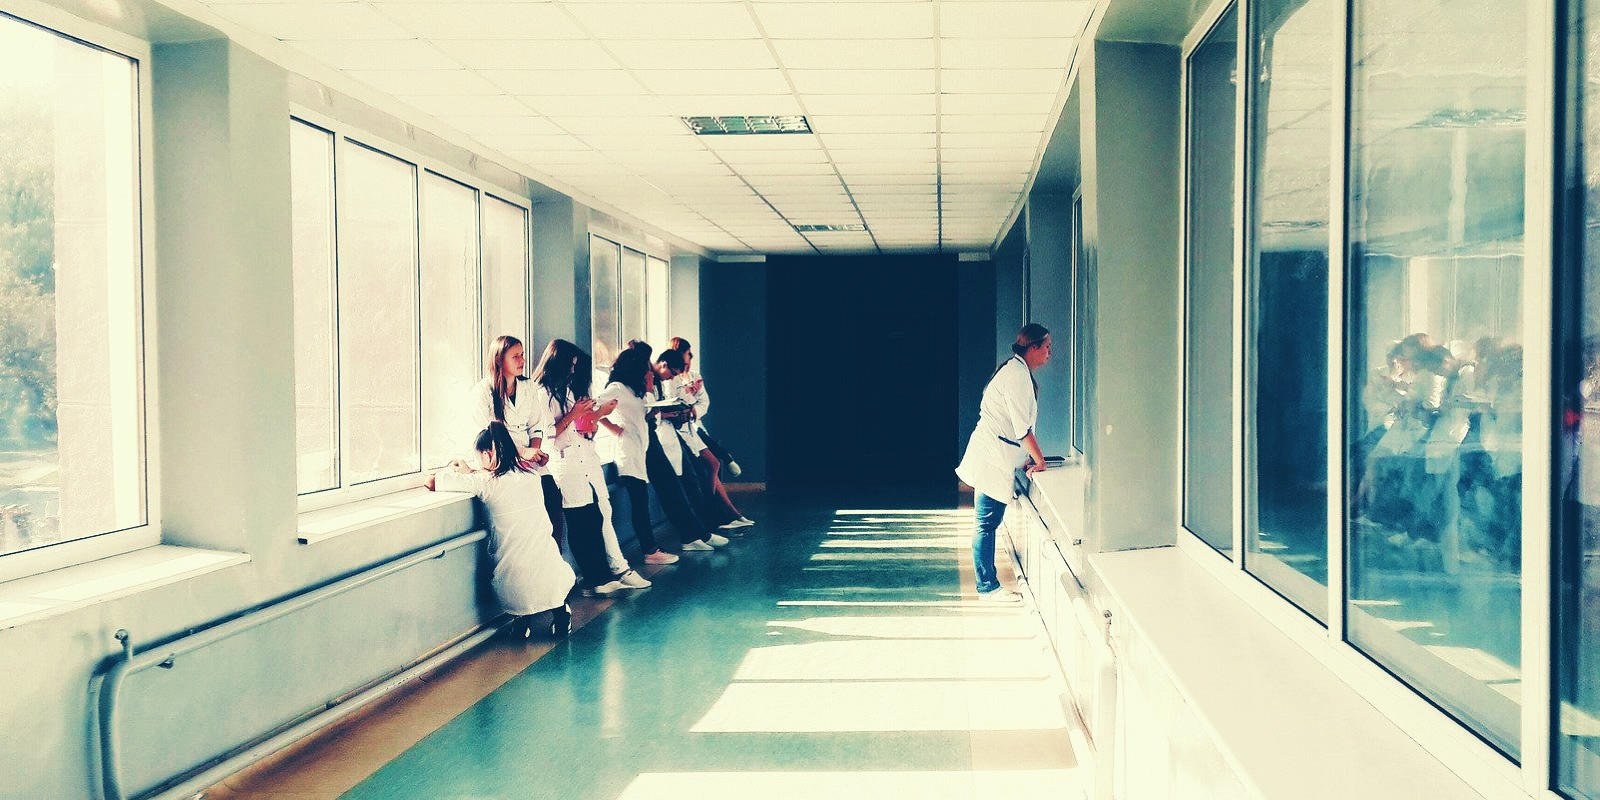 Hospital workers waiting around